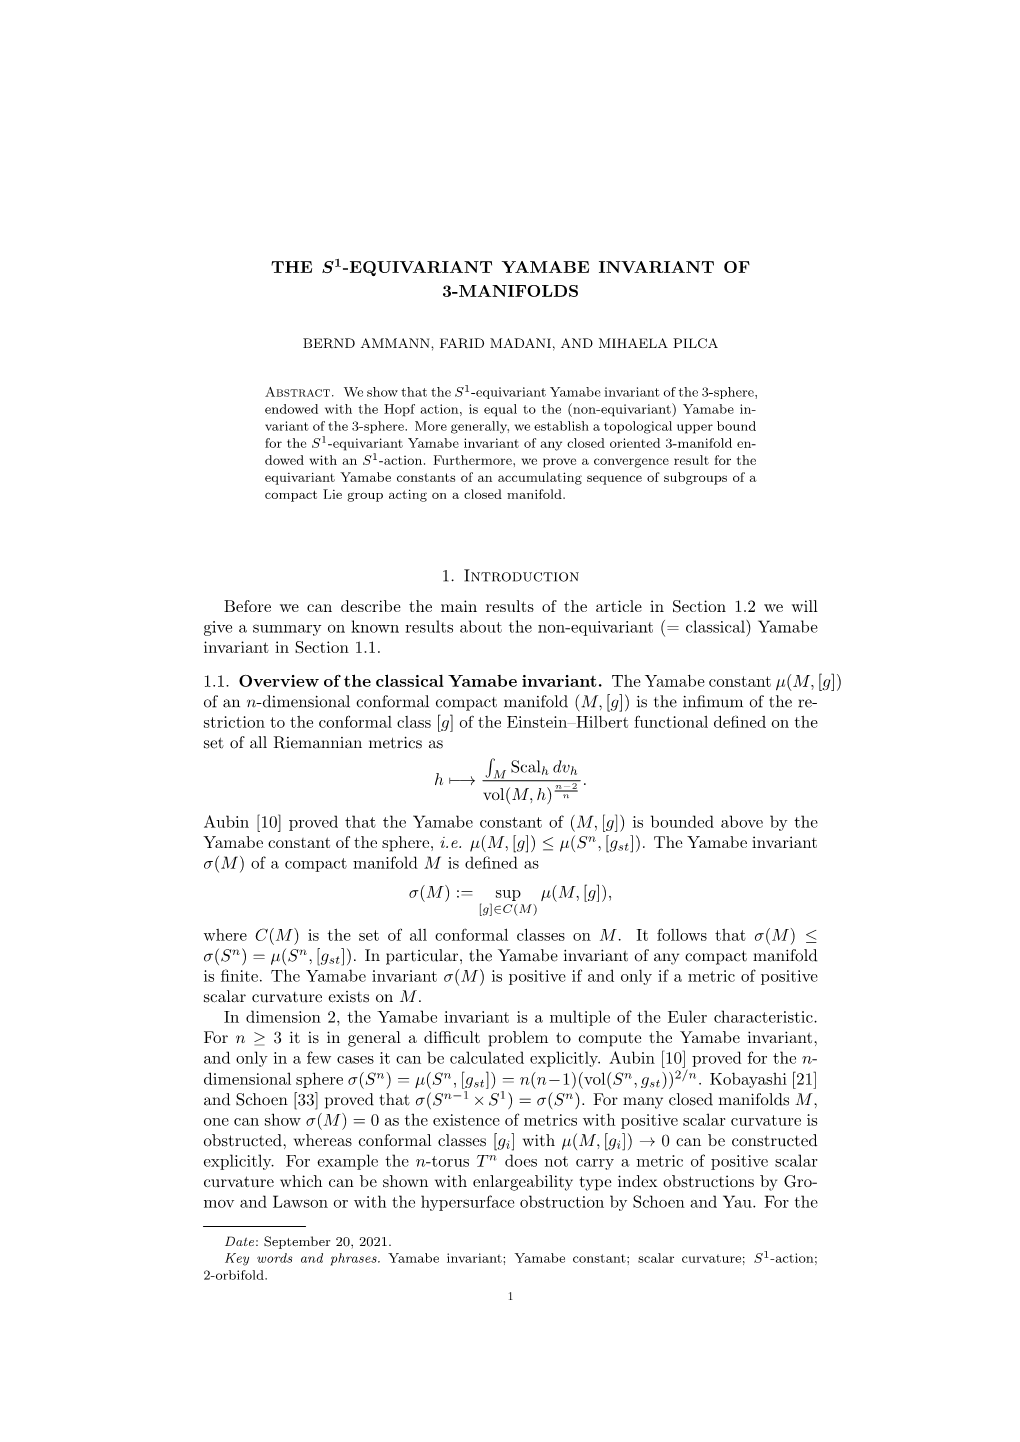 The S1-Equivariant Yamabe Invariant of 3-Manifolds